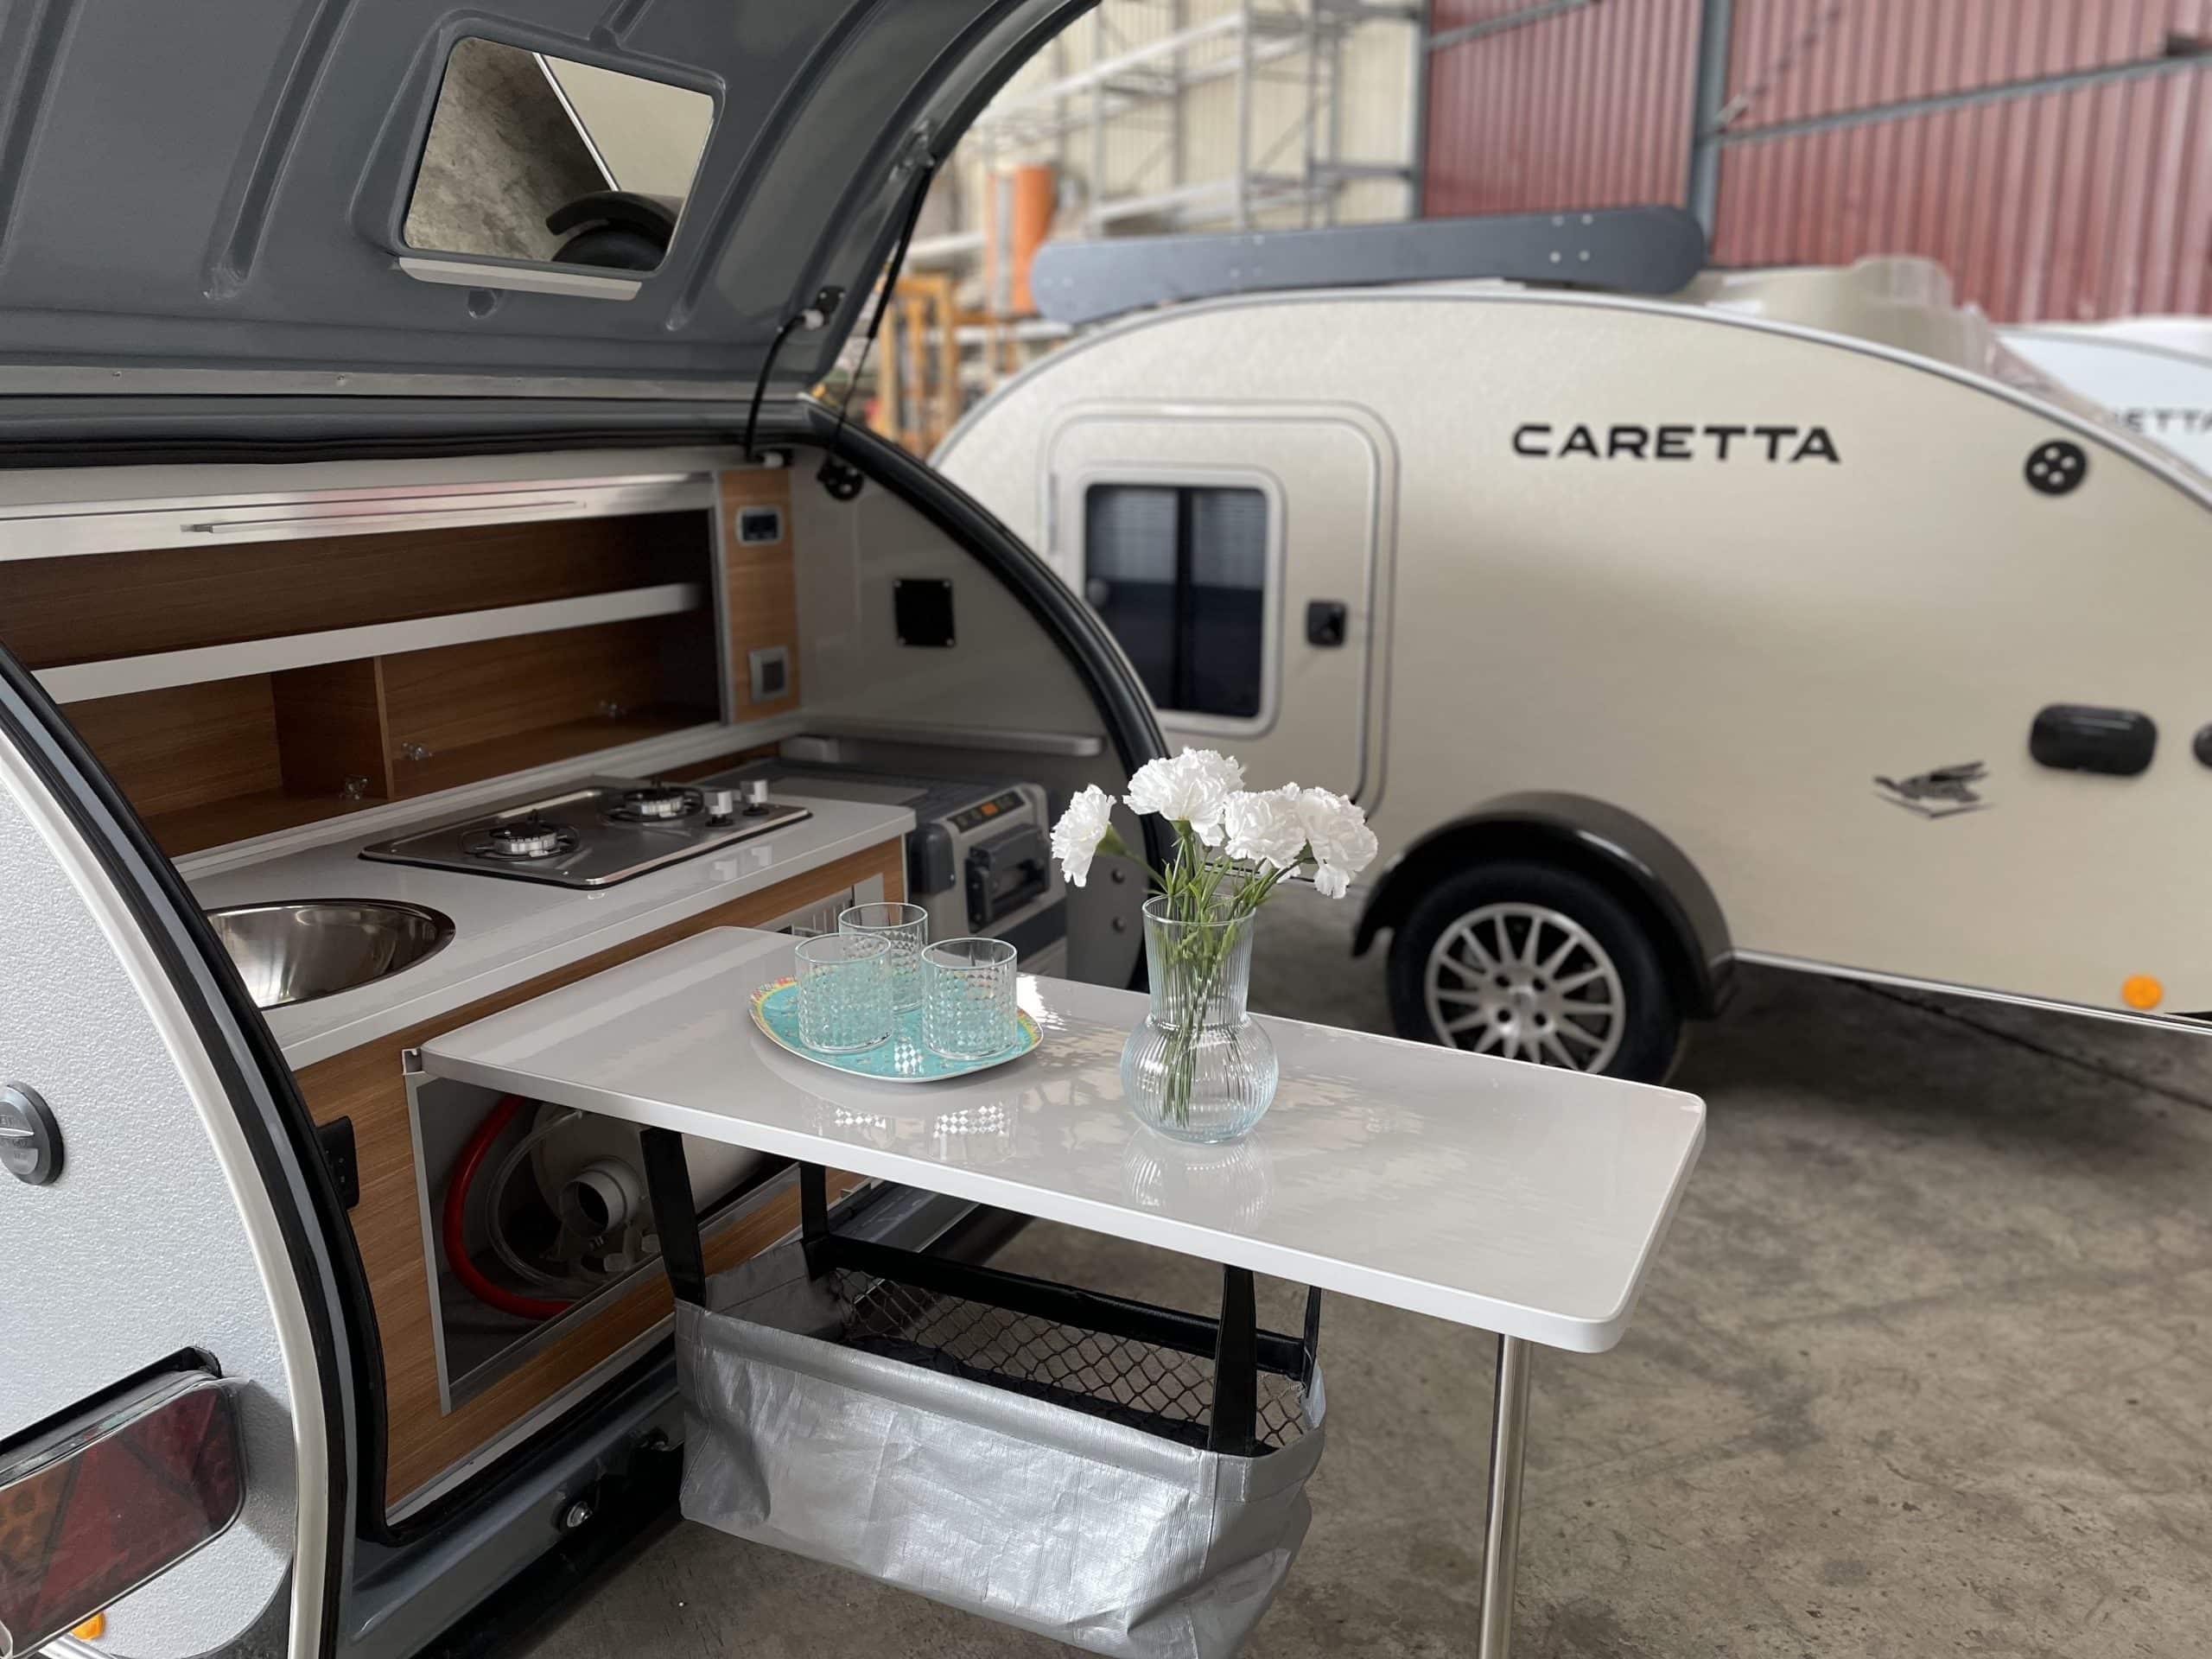 Caretta 1500 - Caretta Caravans